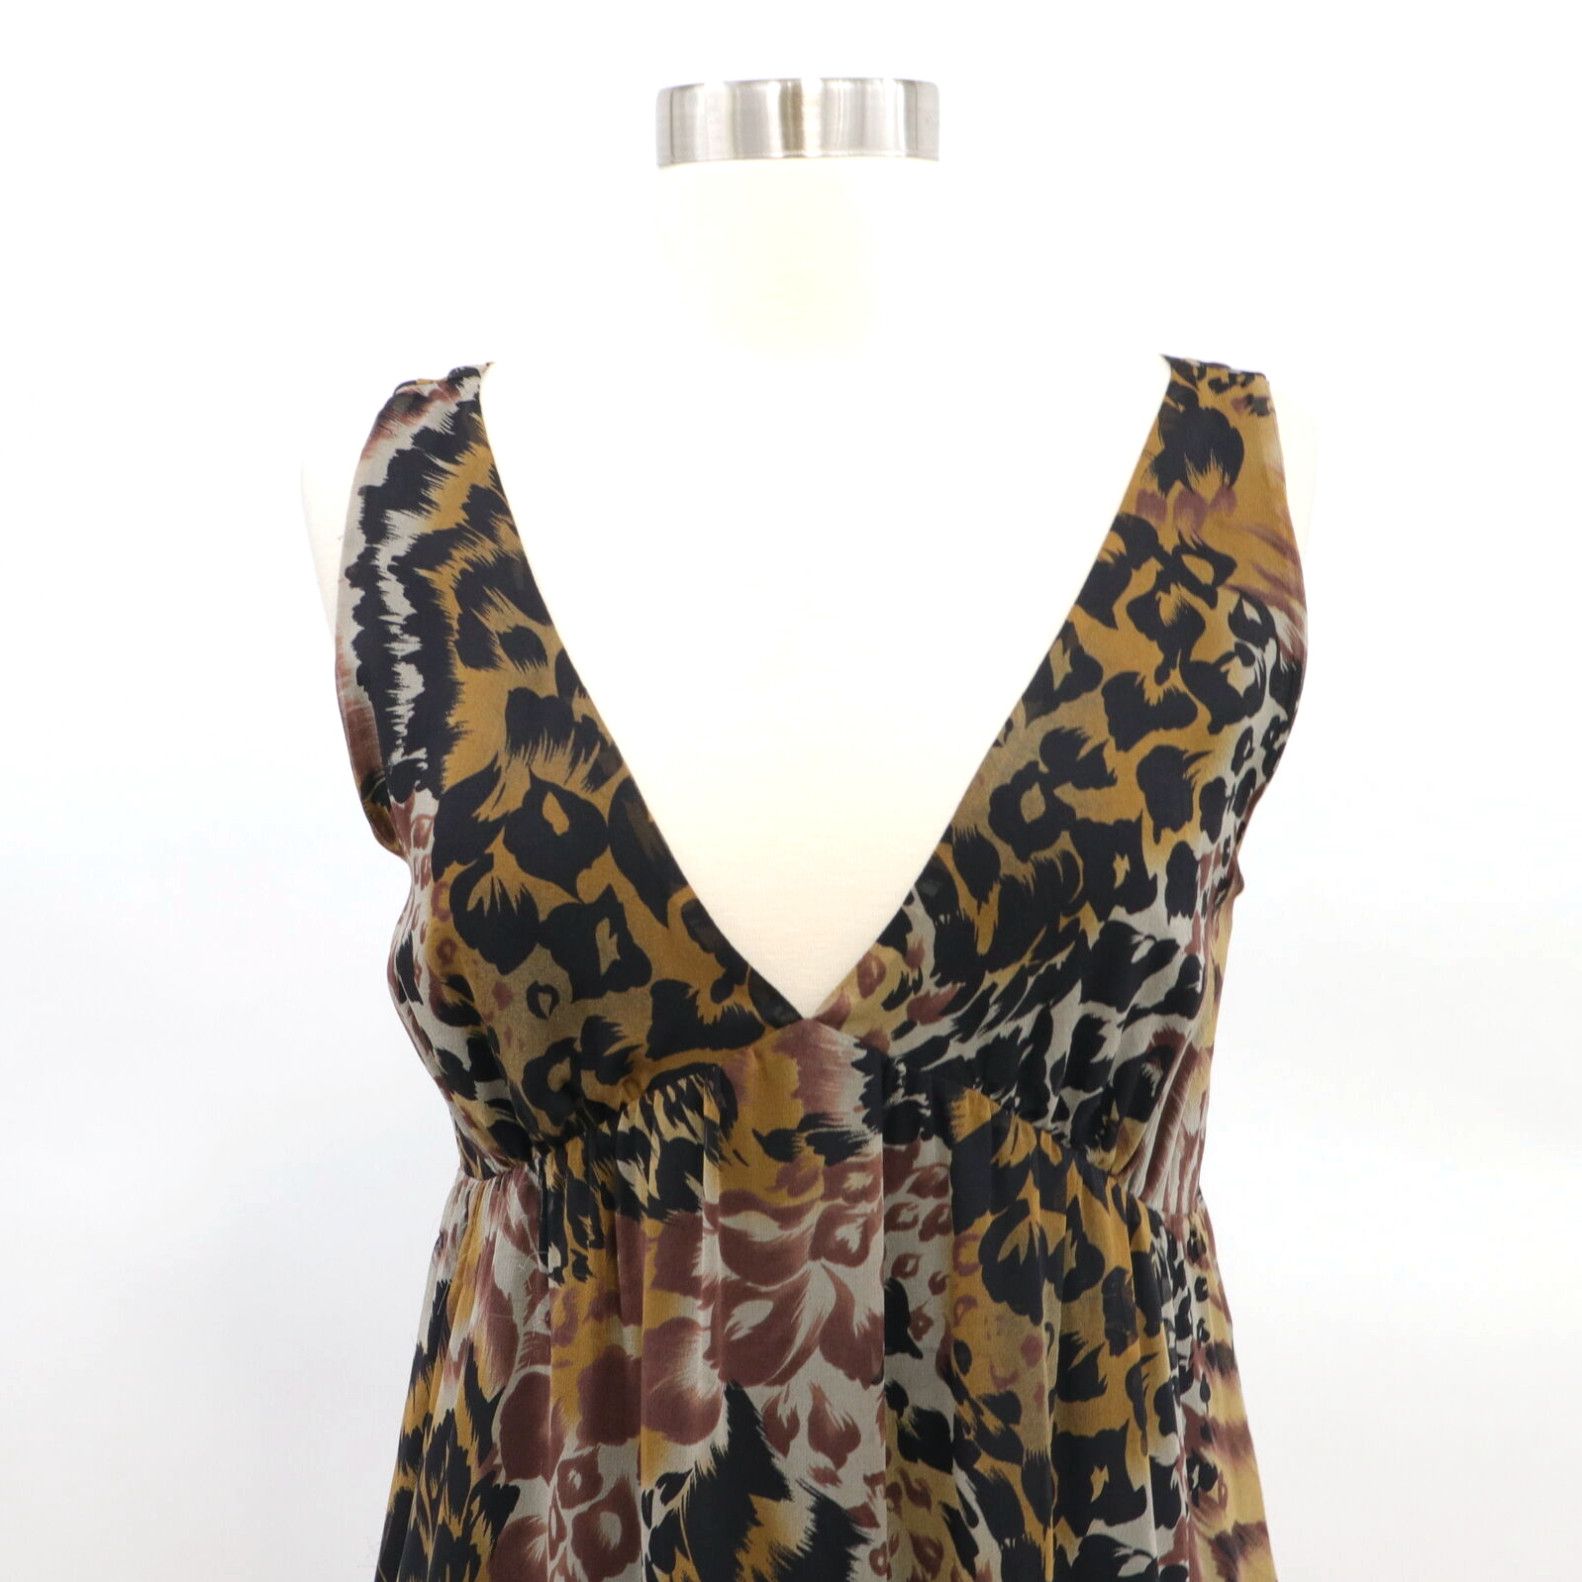 Elizabeth and James Elizabeth & James Mini Dress Silk Womens 2 Ruffles Animal Print Brown Deep V Size XS / US 0-2 / IT 36-38 - 2 Preview